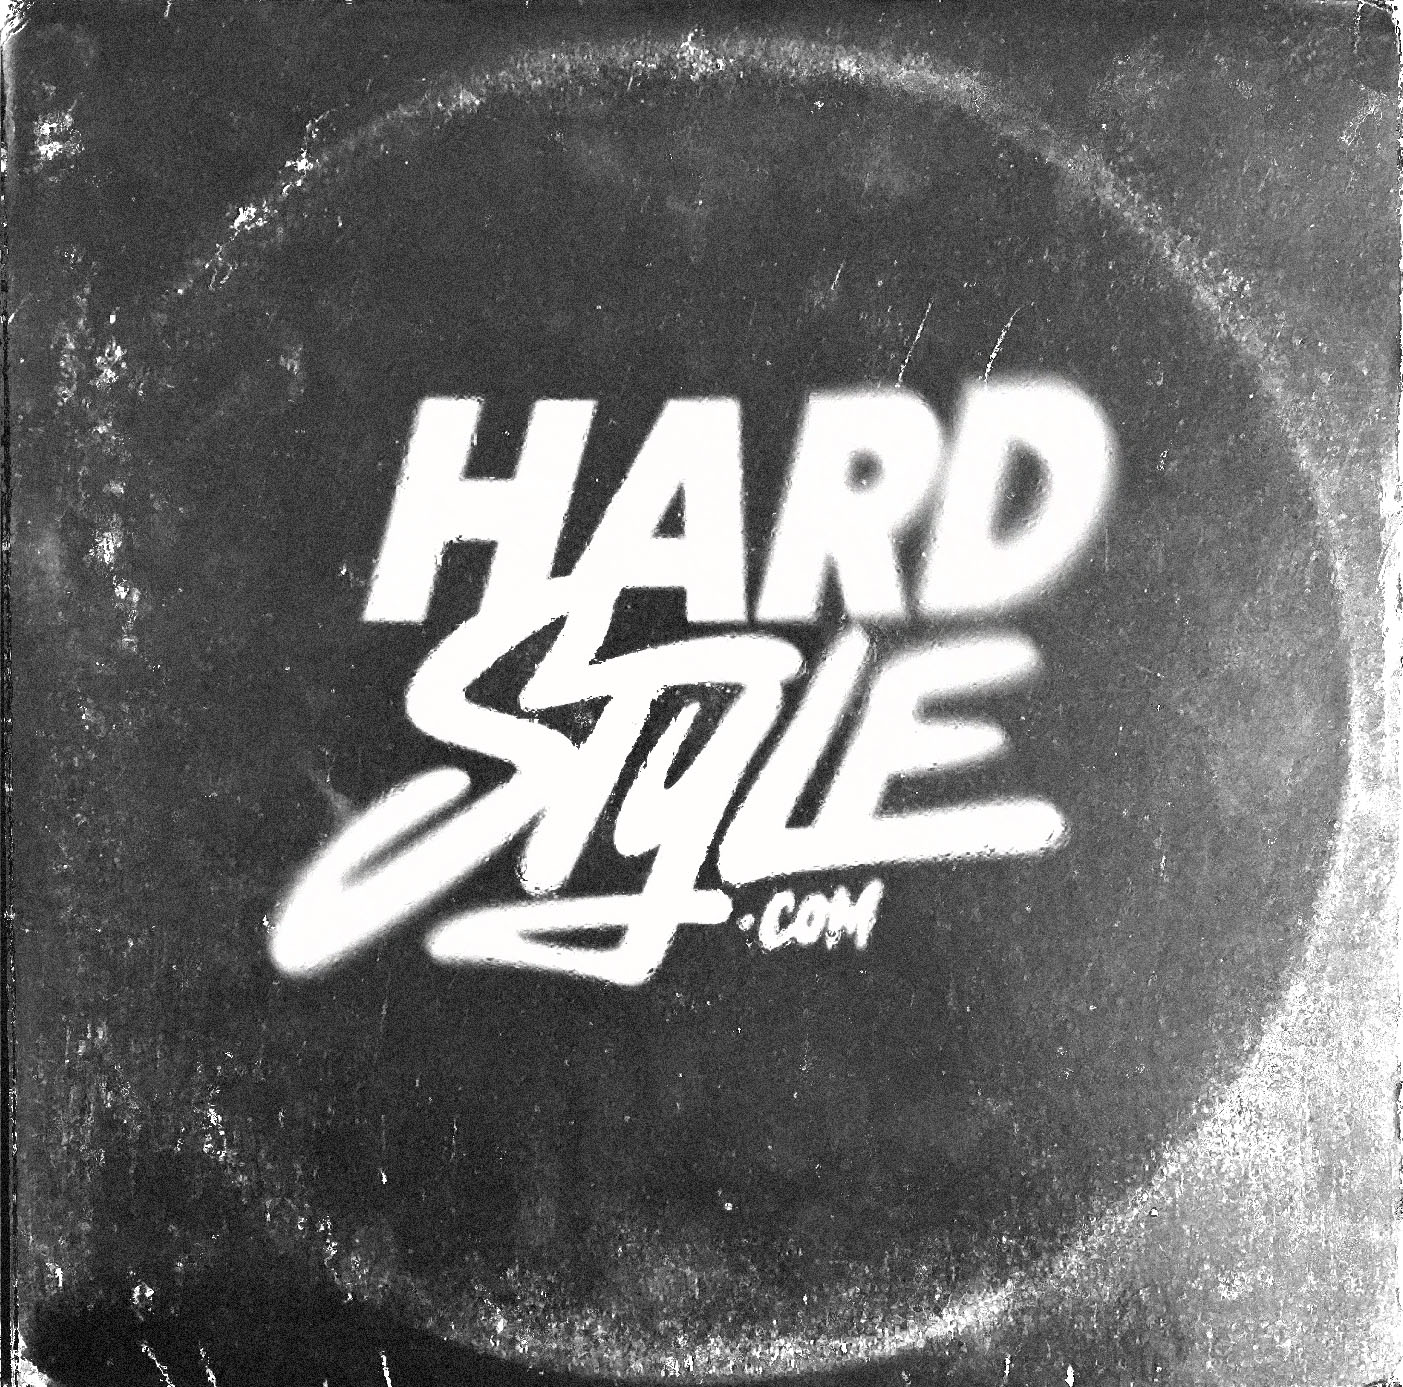 Hard Dance Nation, Vol. 7